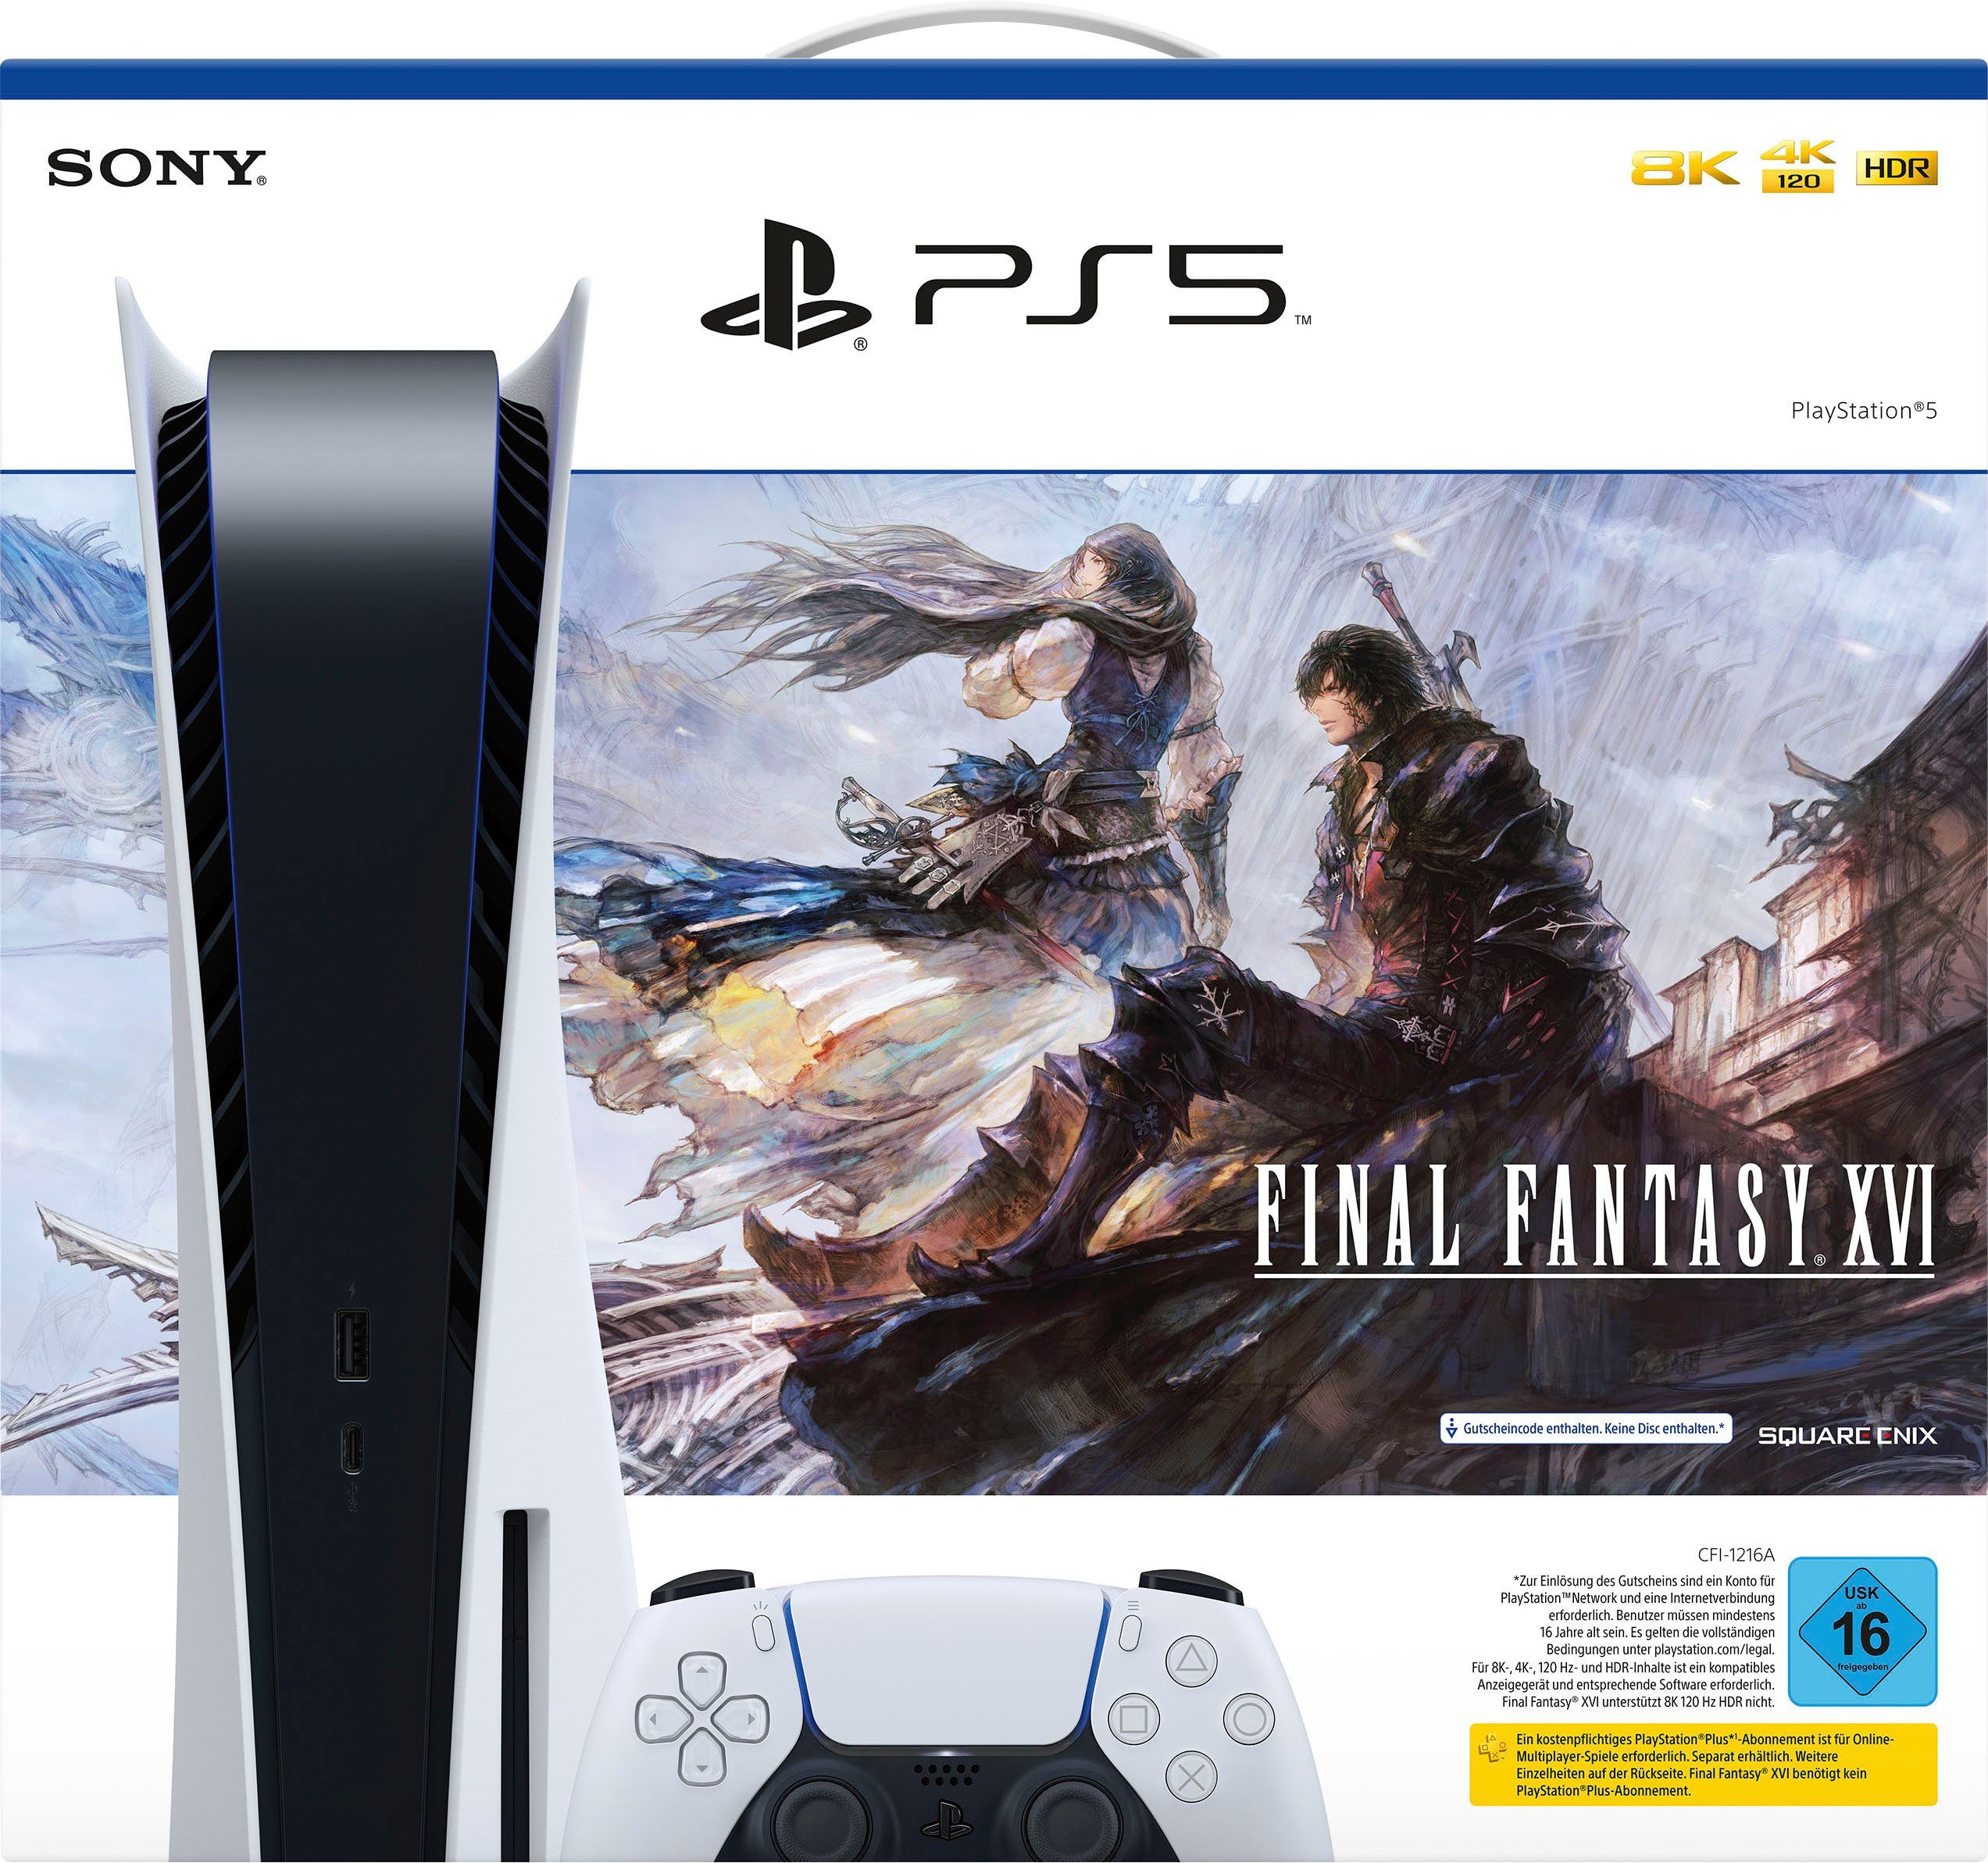 Fantasy XVI Final PlayStation 5 Sony Bundle